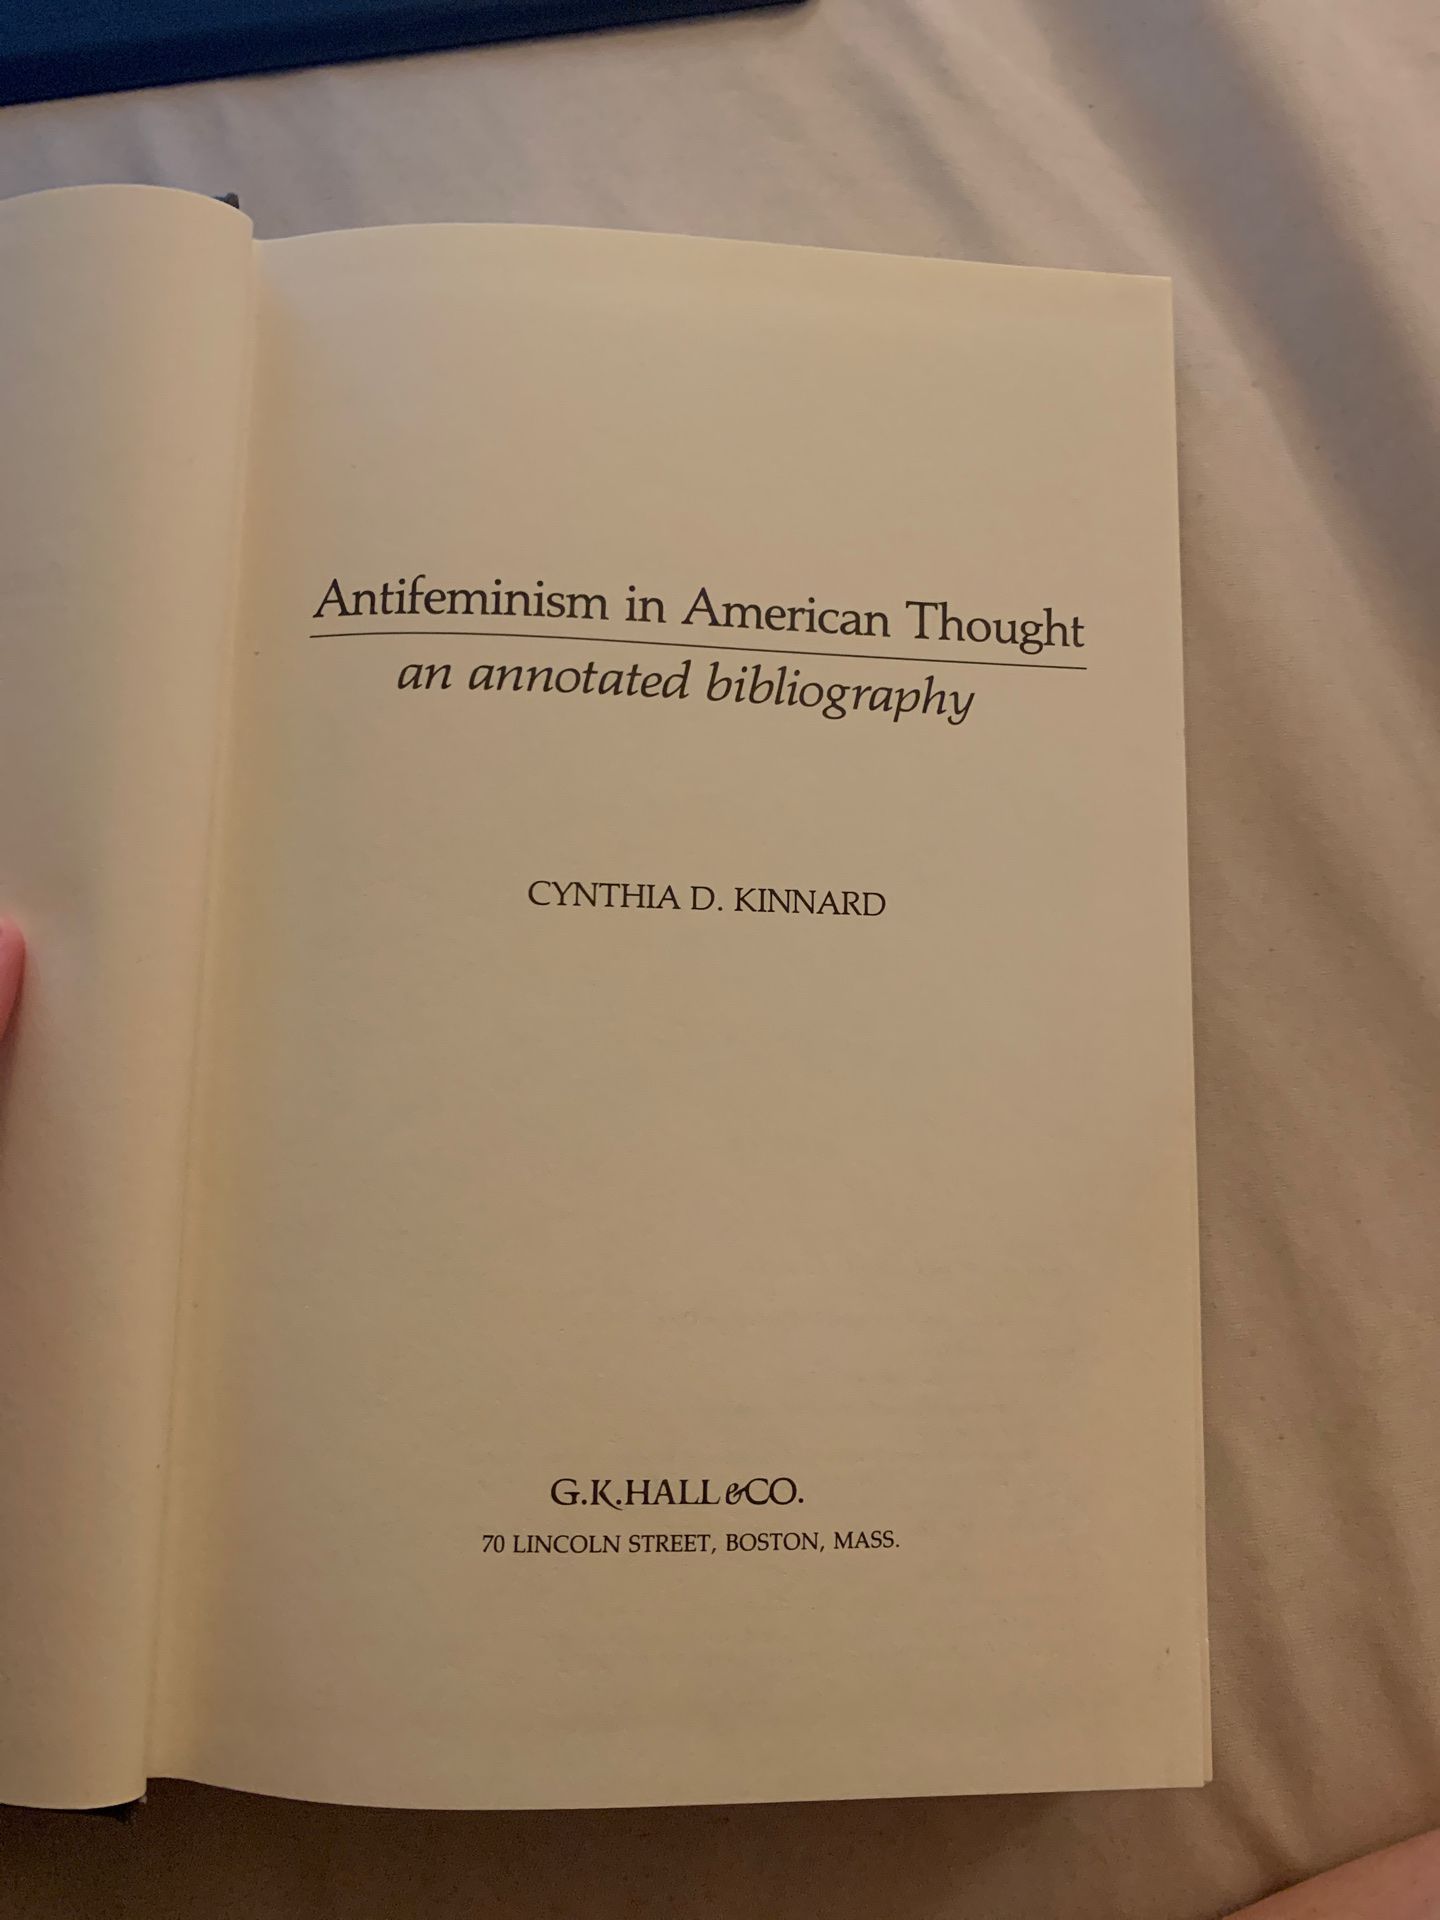 Antifeminism in American Thought by Cynthia D. Kinnard- Printed 1986